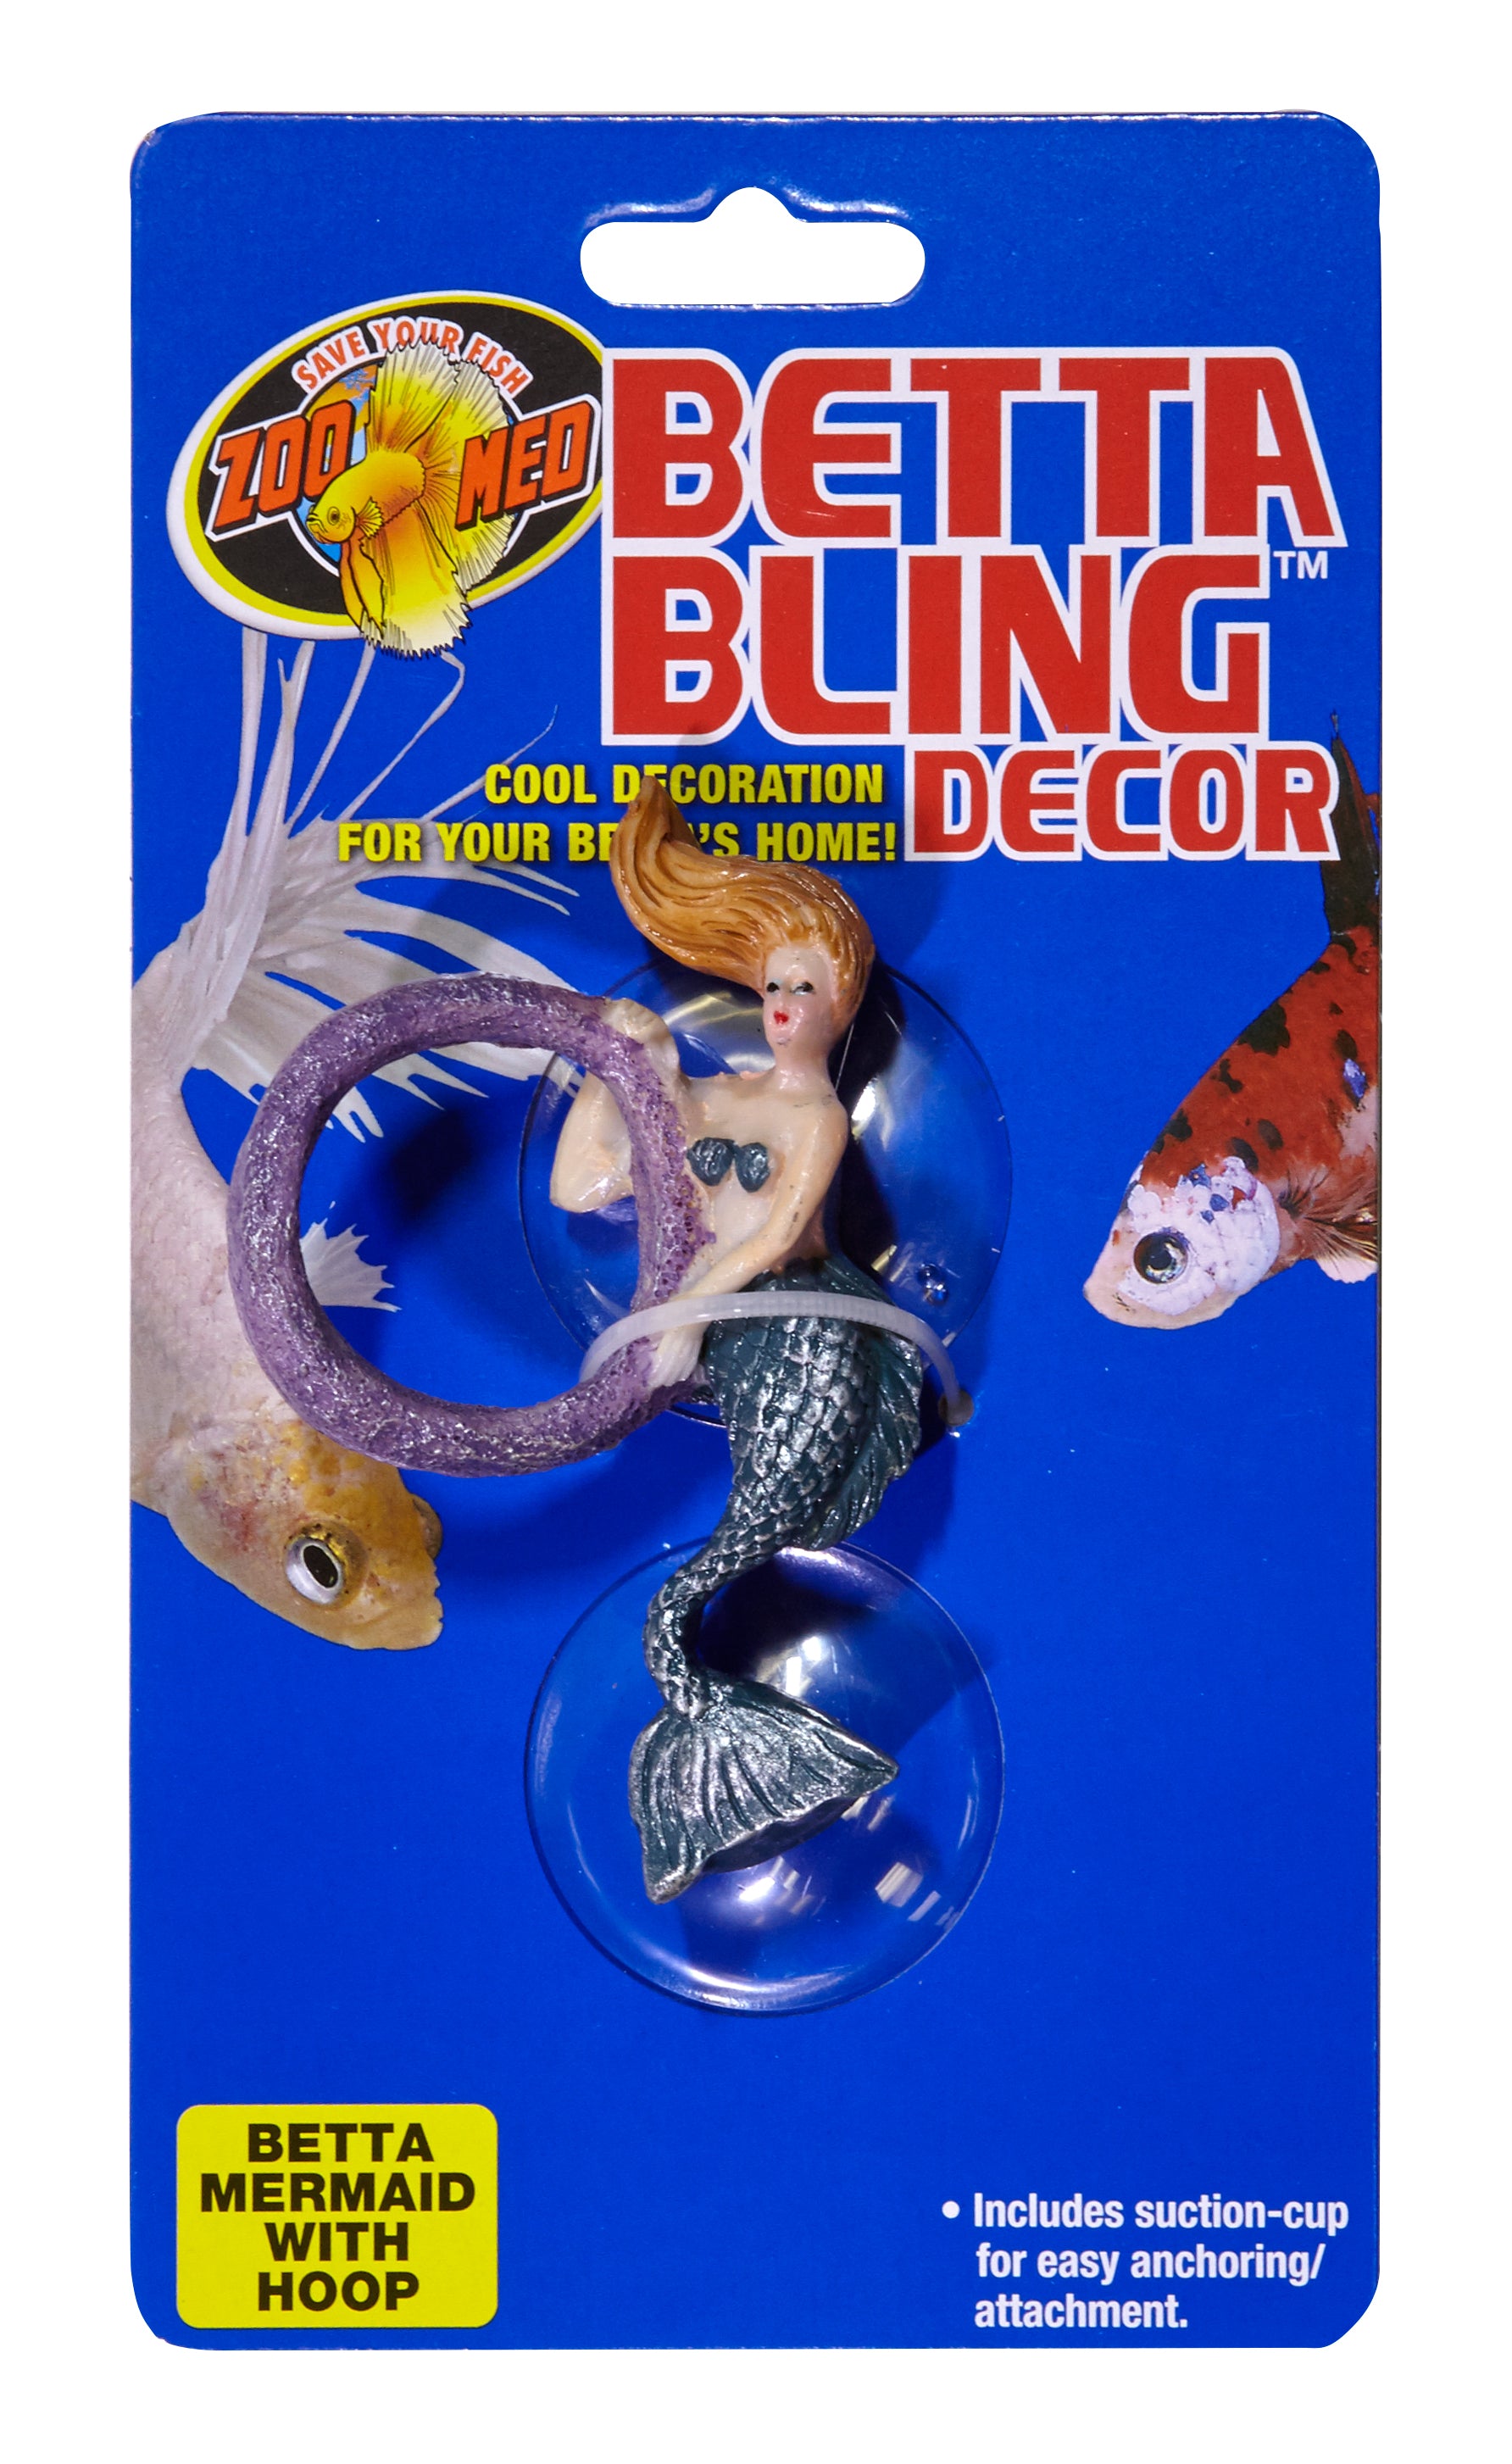 Zoo Med Betta Bling Decor – Mermaid with Hoop